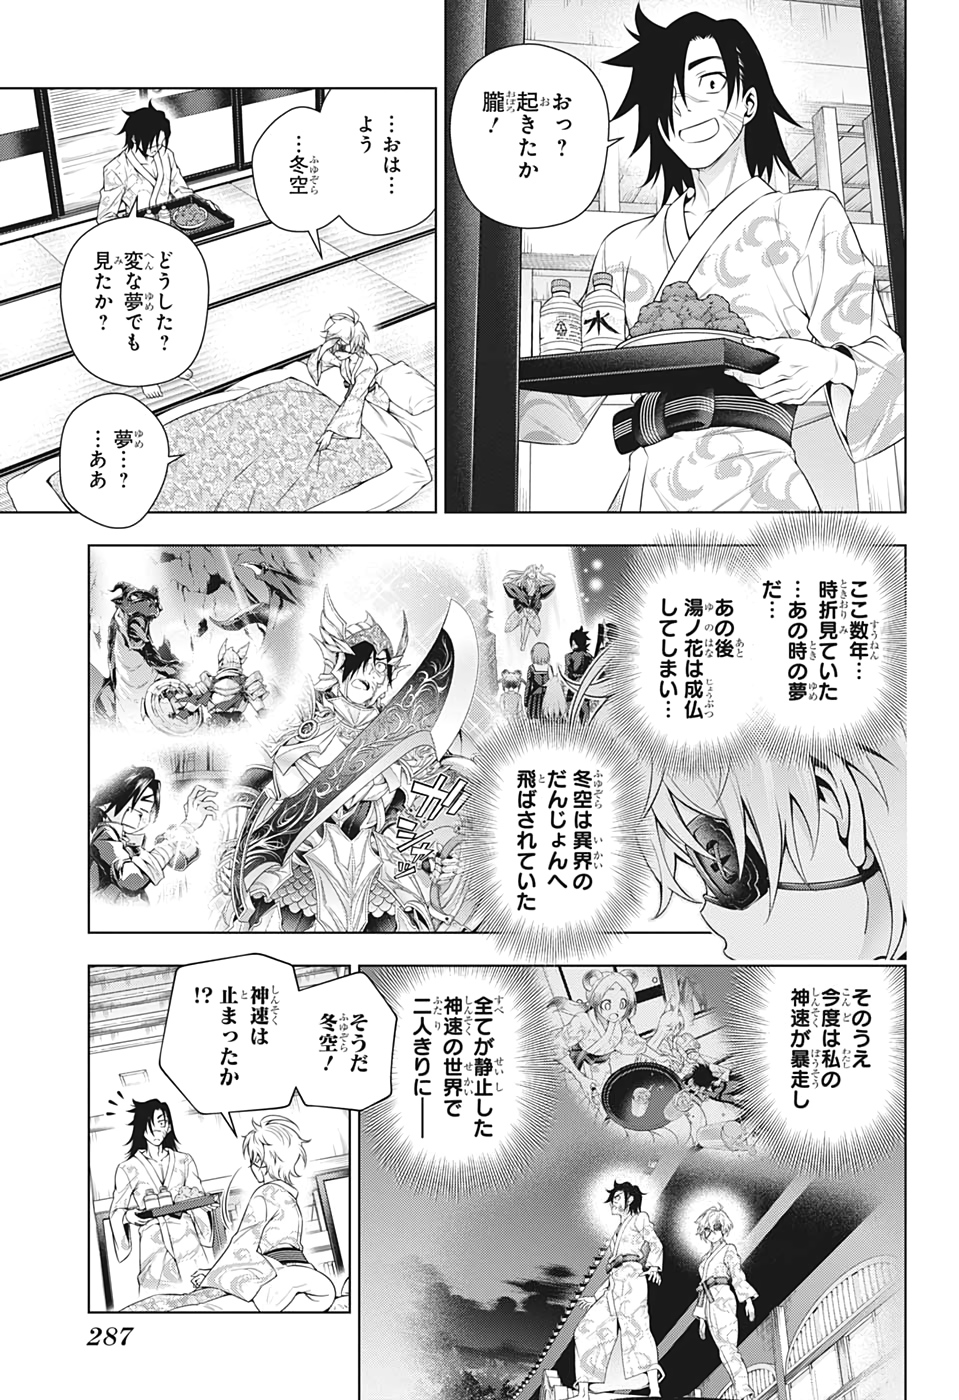 Yuragi-sou no Yuuna-san - ゆらぎ荘の幽奈さん - Chapter 201 - Page 3